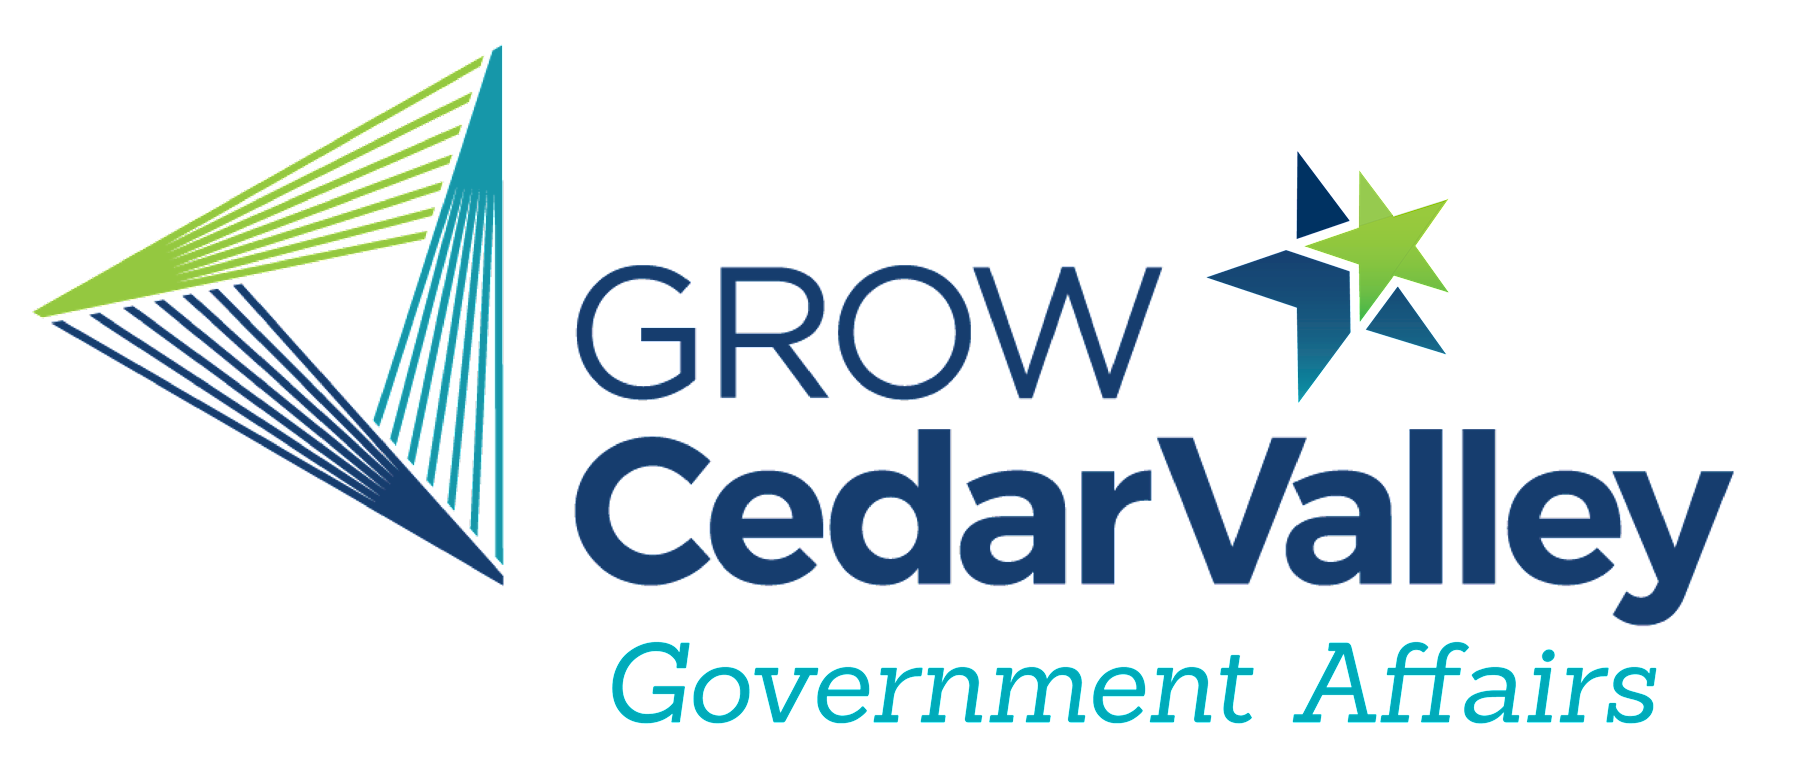 Grow Cedar Valley Government Affairs